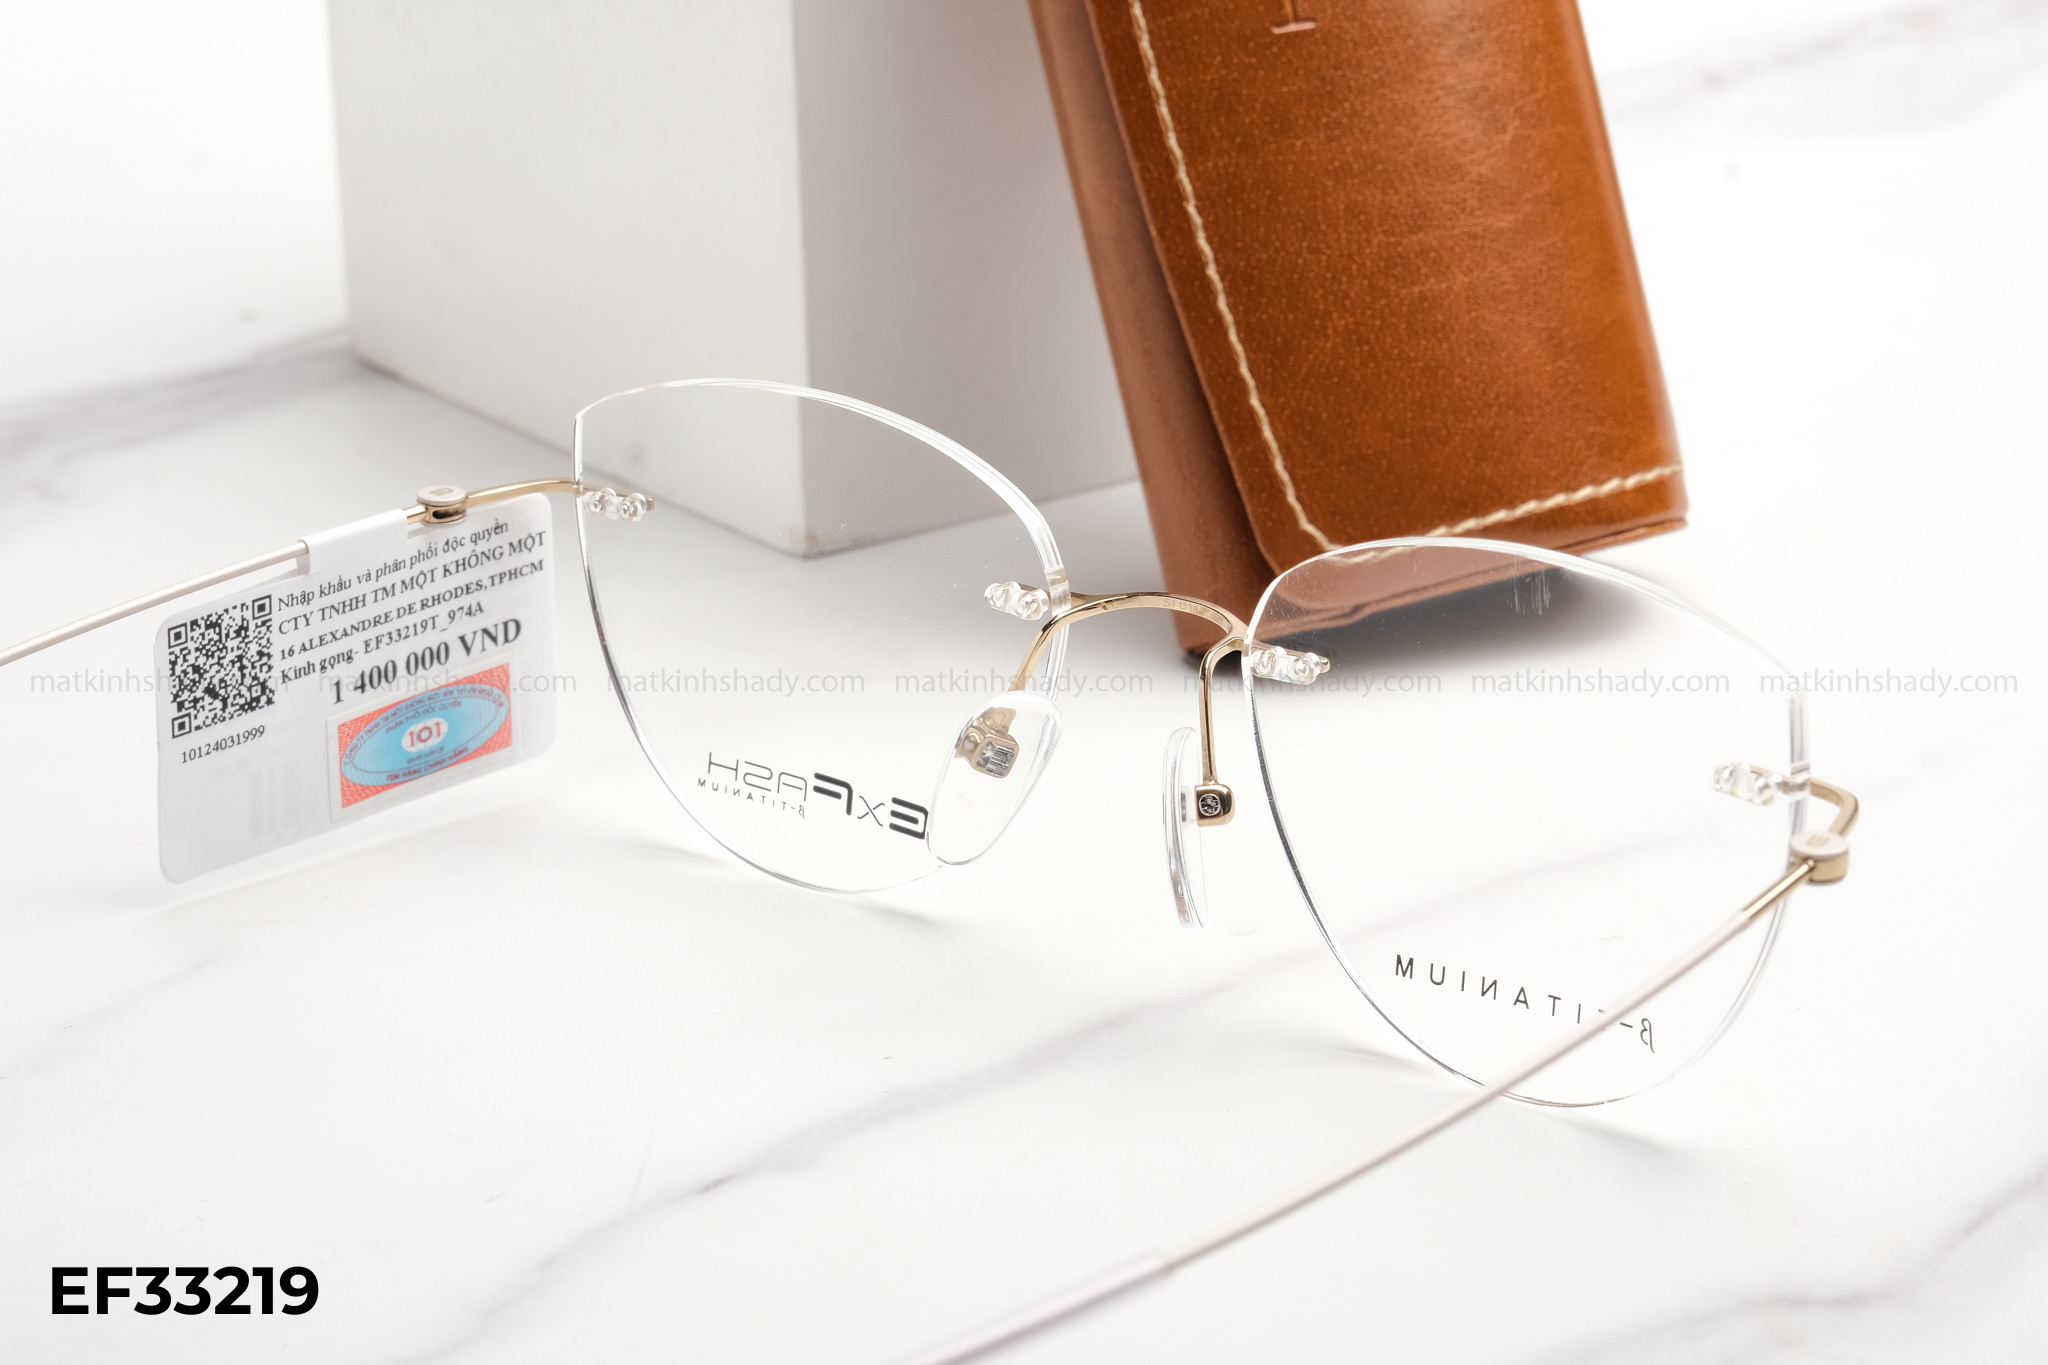  Exfash Eyewear - Glasses - EF33219 